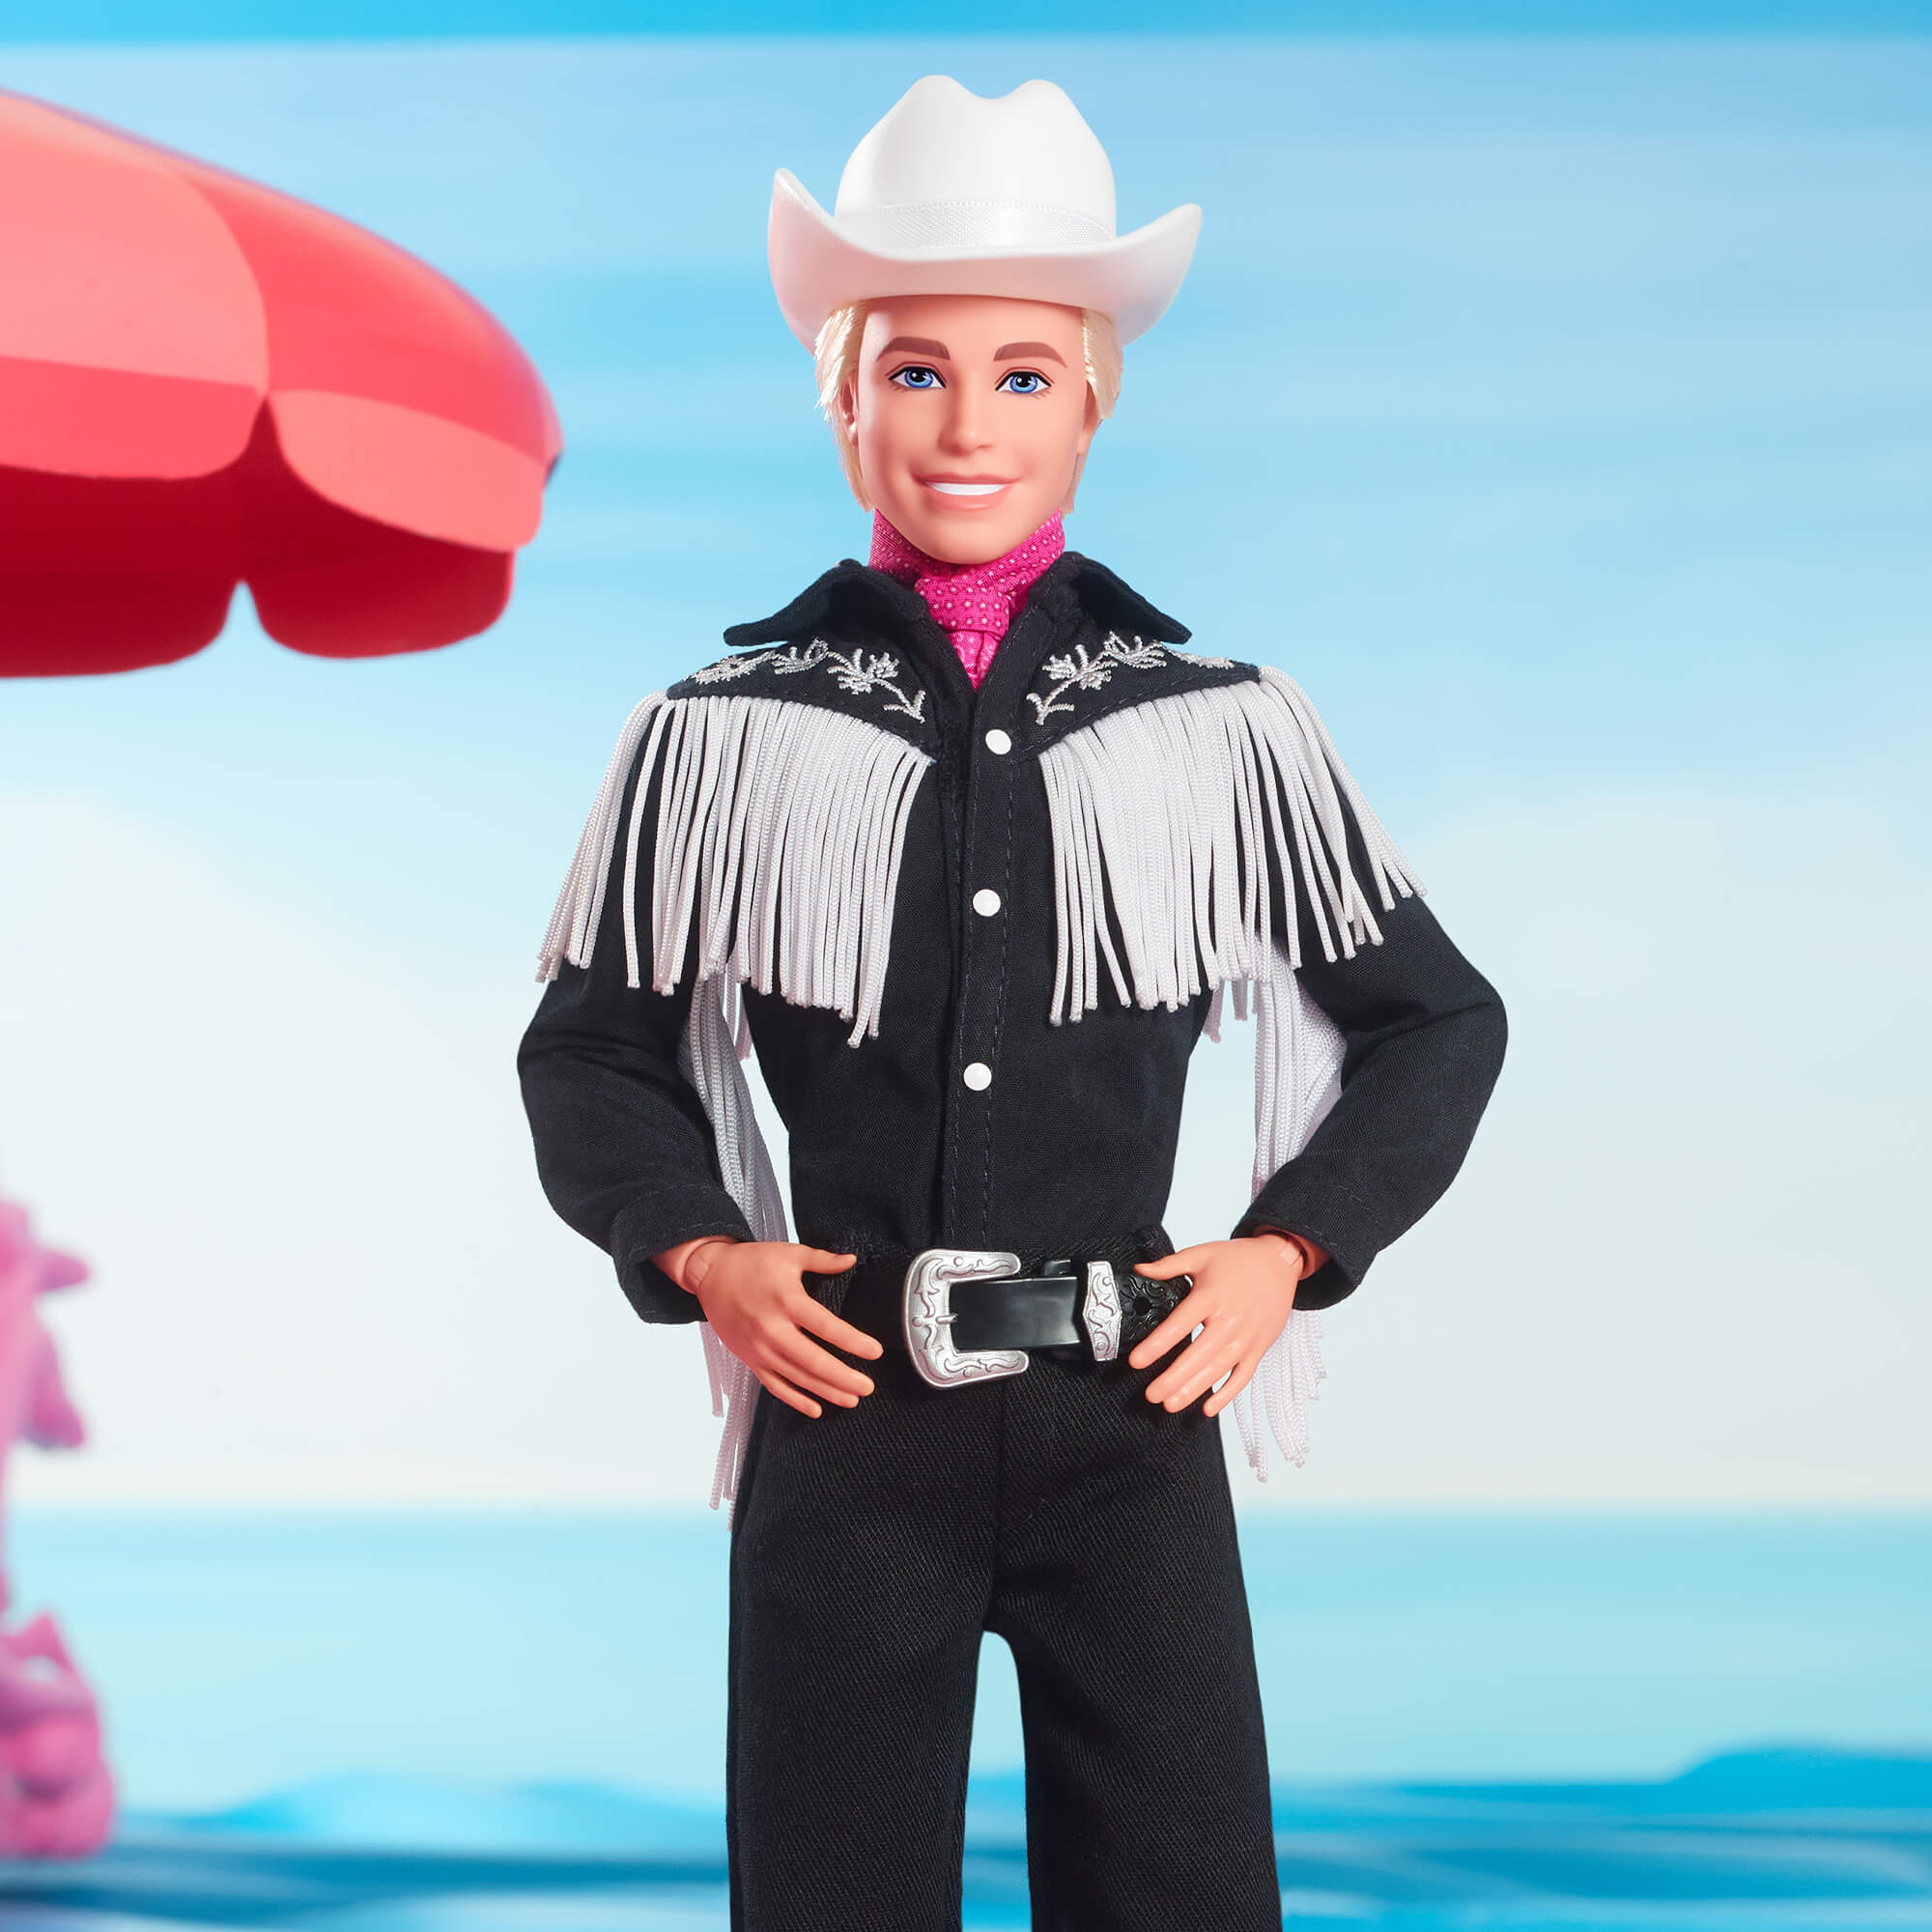 Ken Cowboy Costume